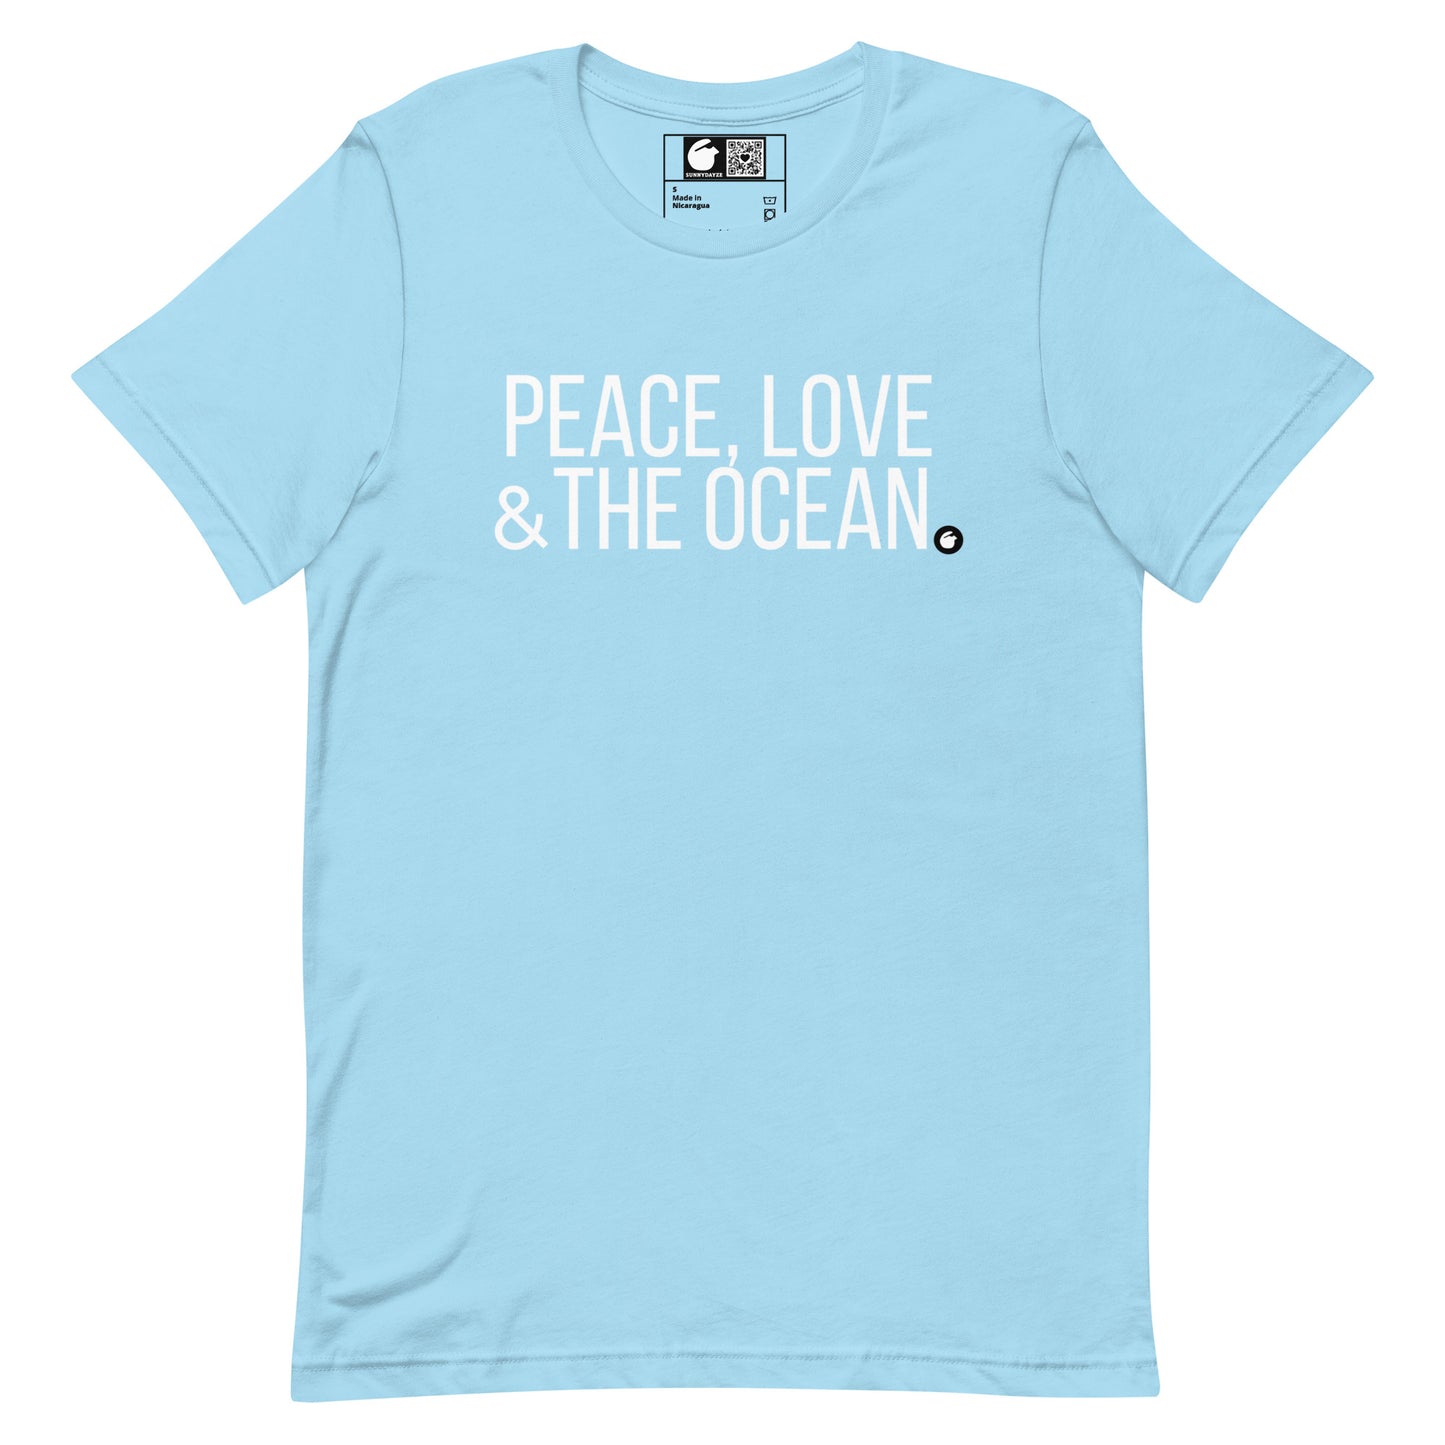 THE OCEAN Short-Sleeve Unisex t-shirt